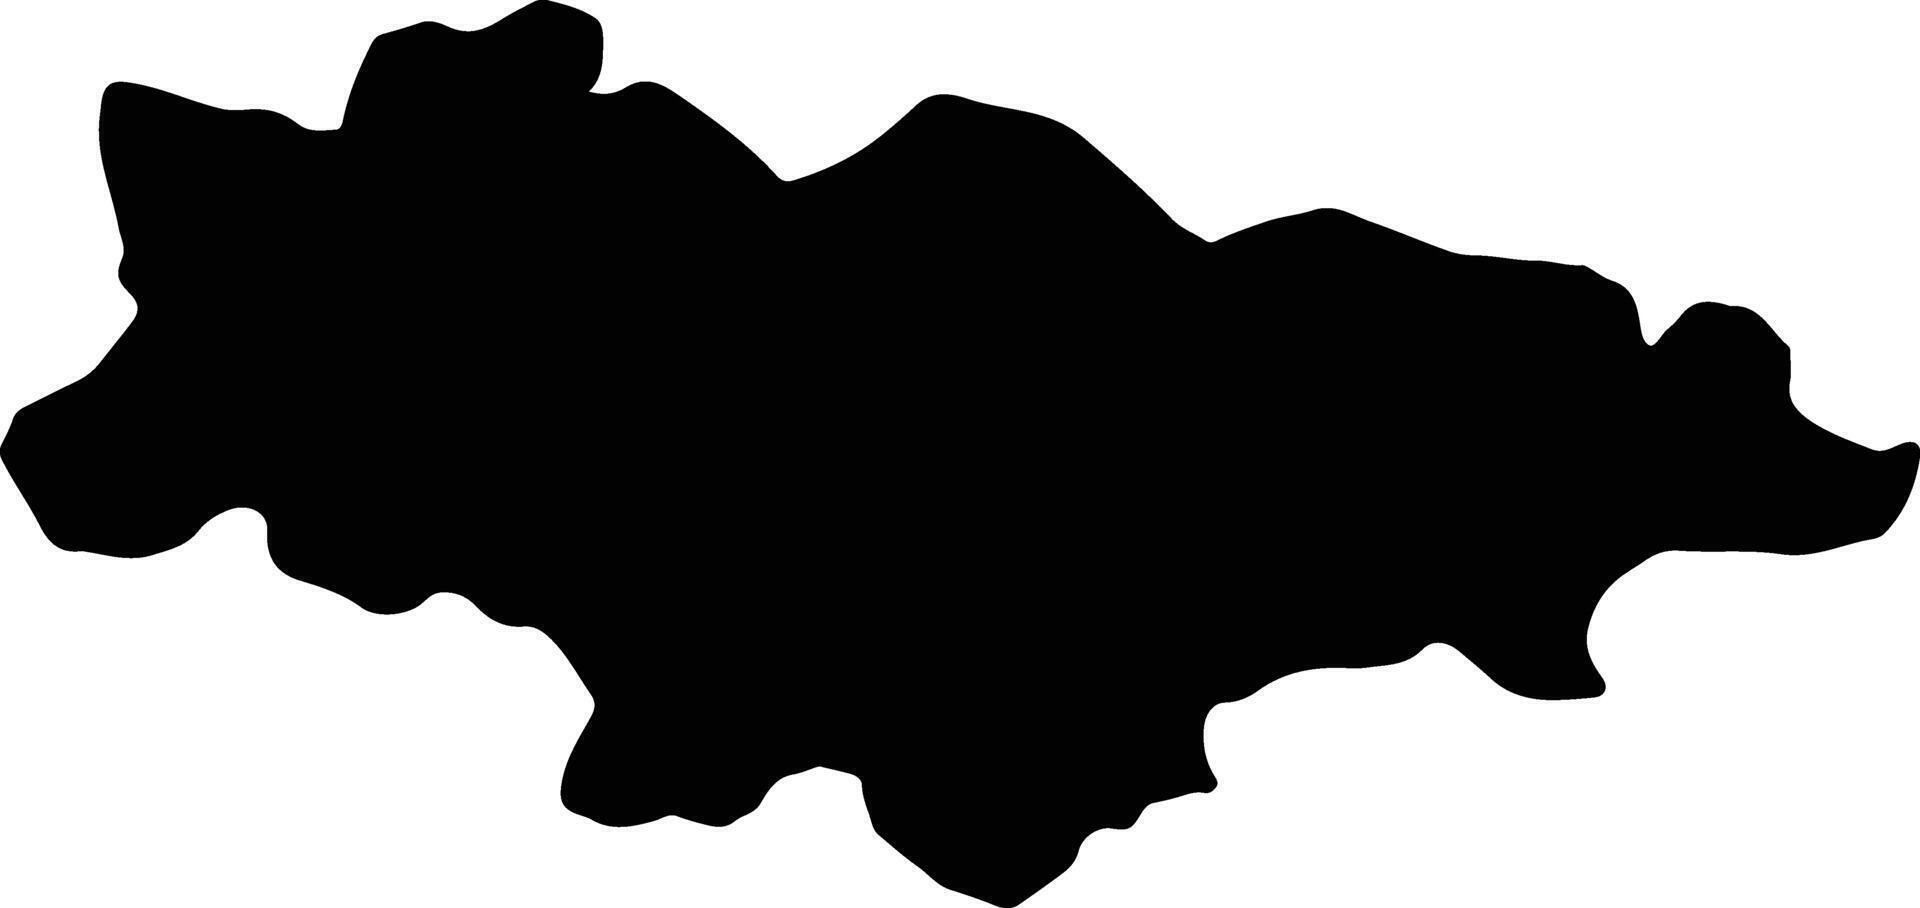 Haskovo Bulgaria silhouette map vector